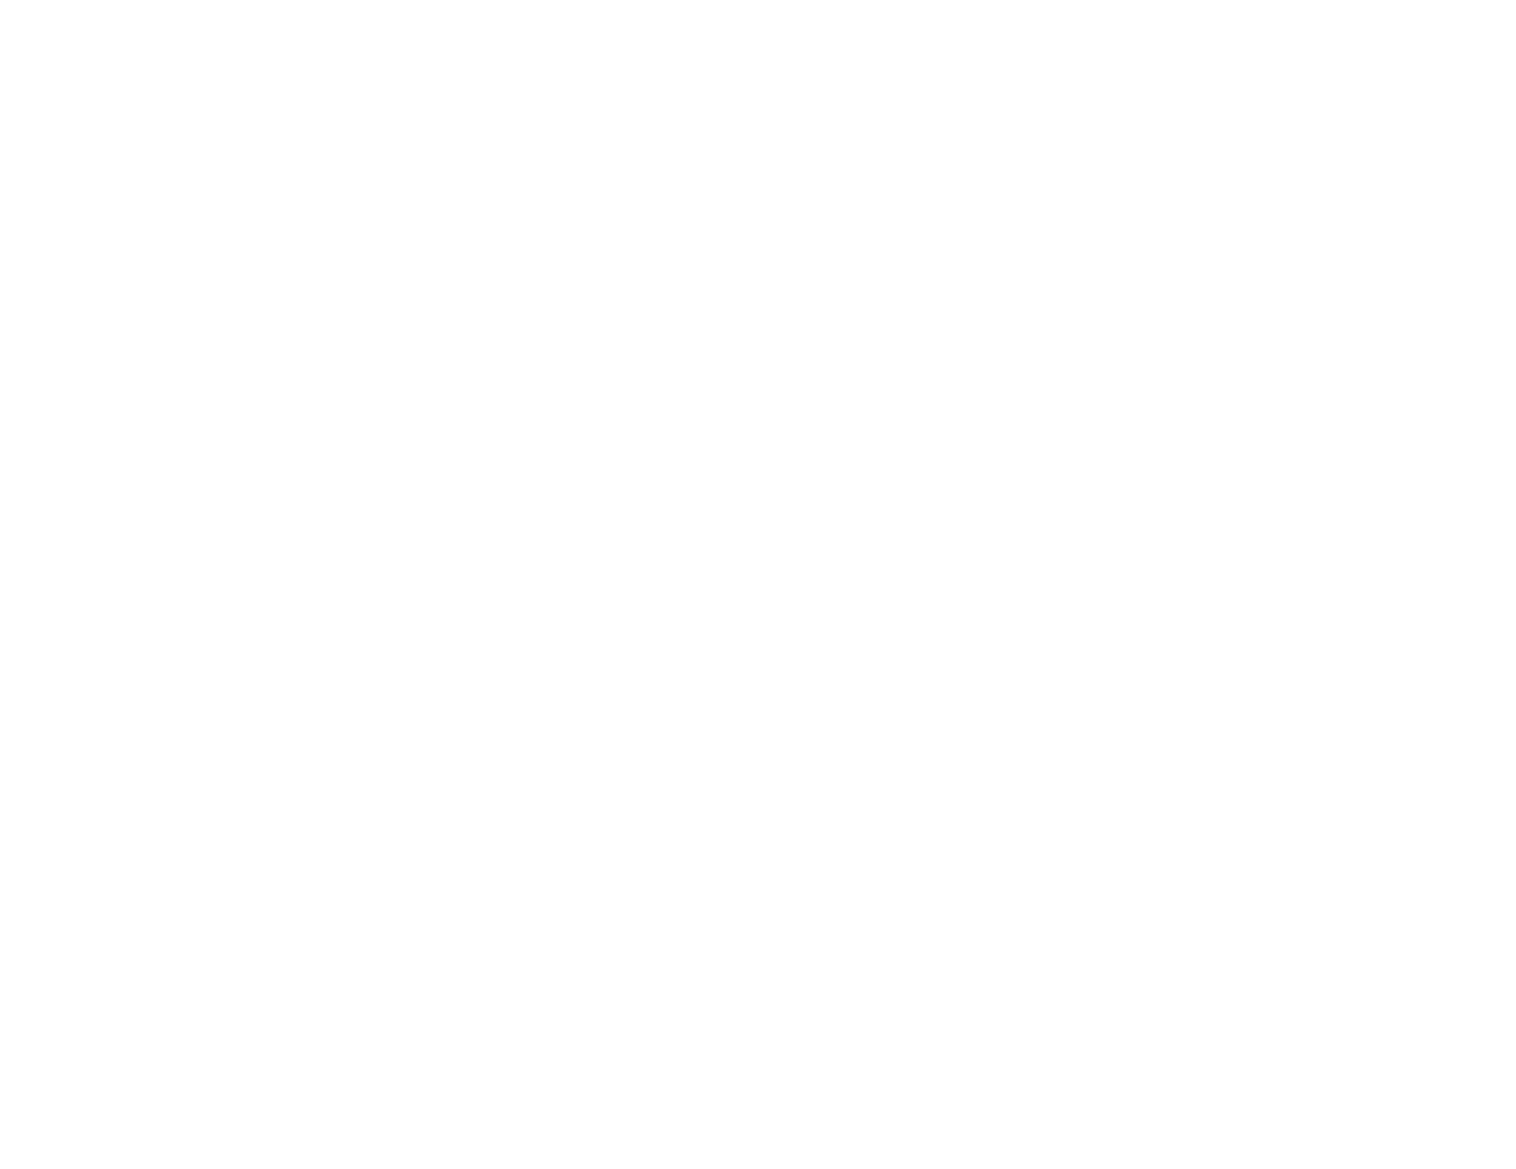 #FondationDuChuDeQuebec #FCHUQC #FCHUQClogo